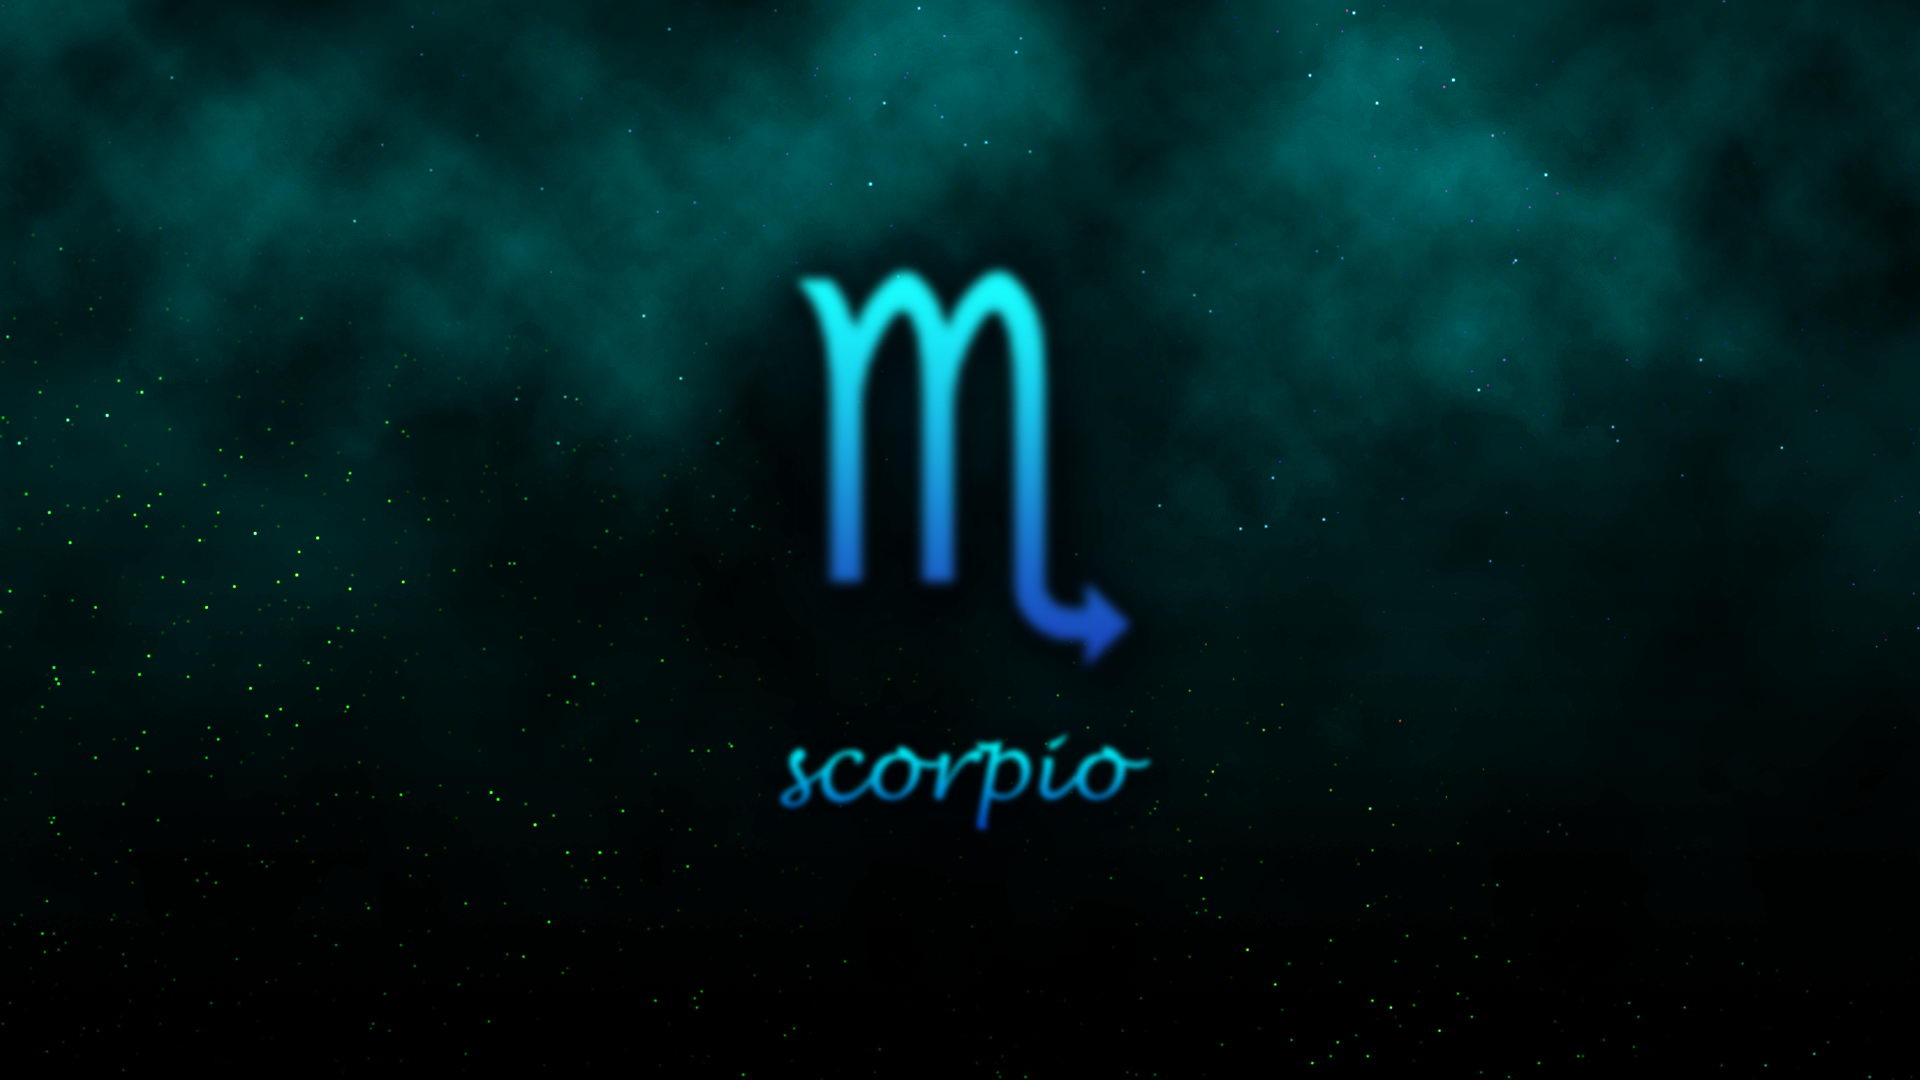 Scorpio Background Wallpaper High Definition Quality